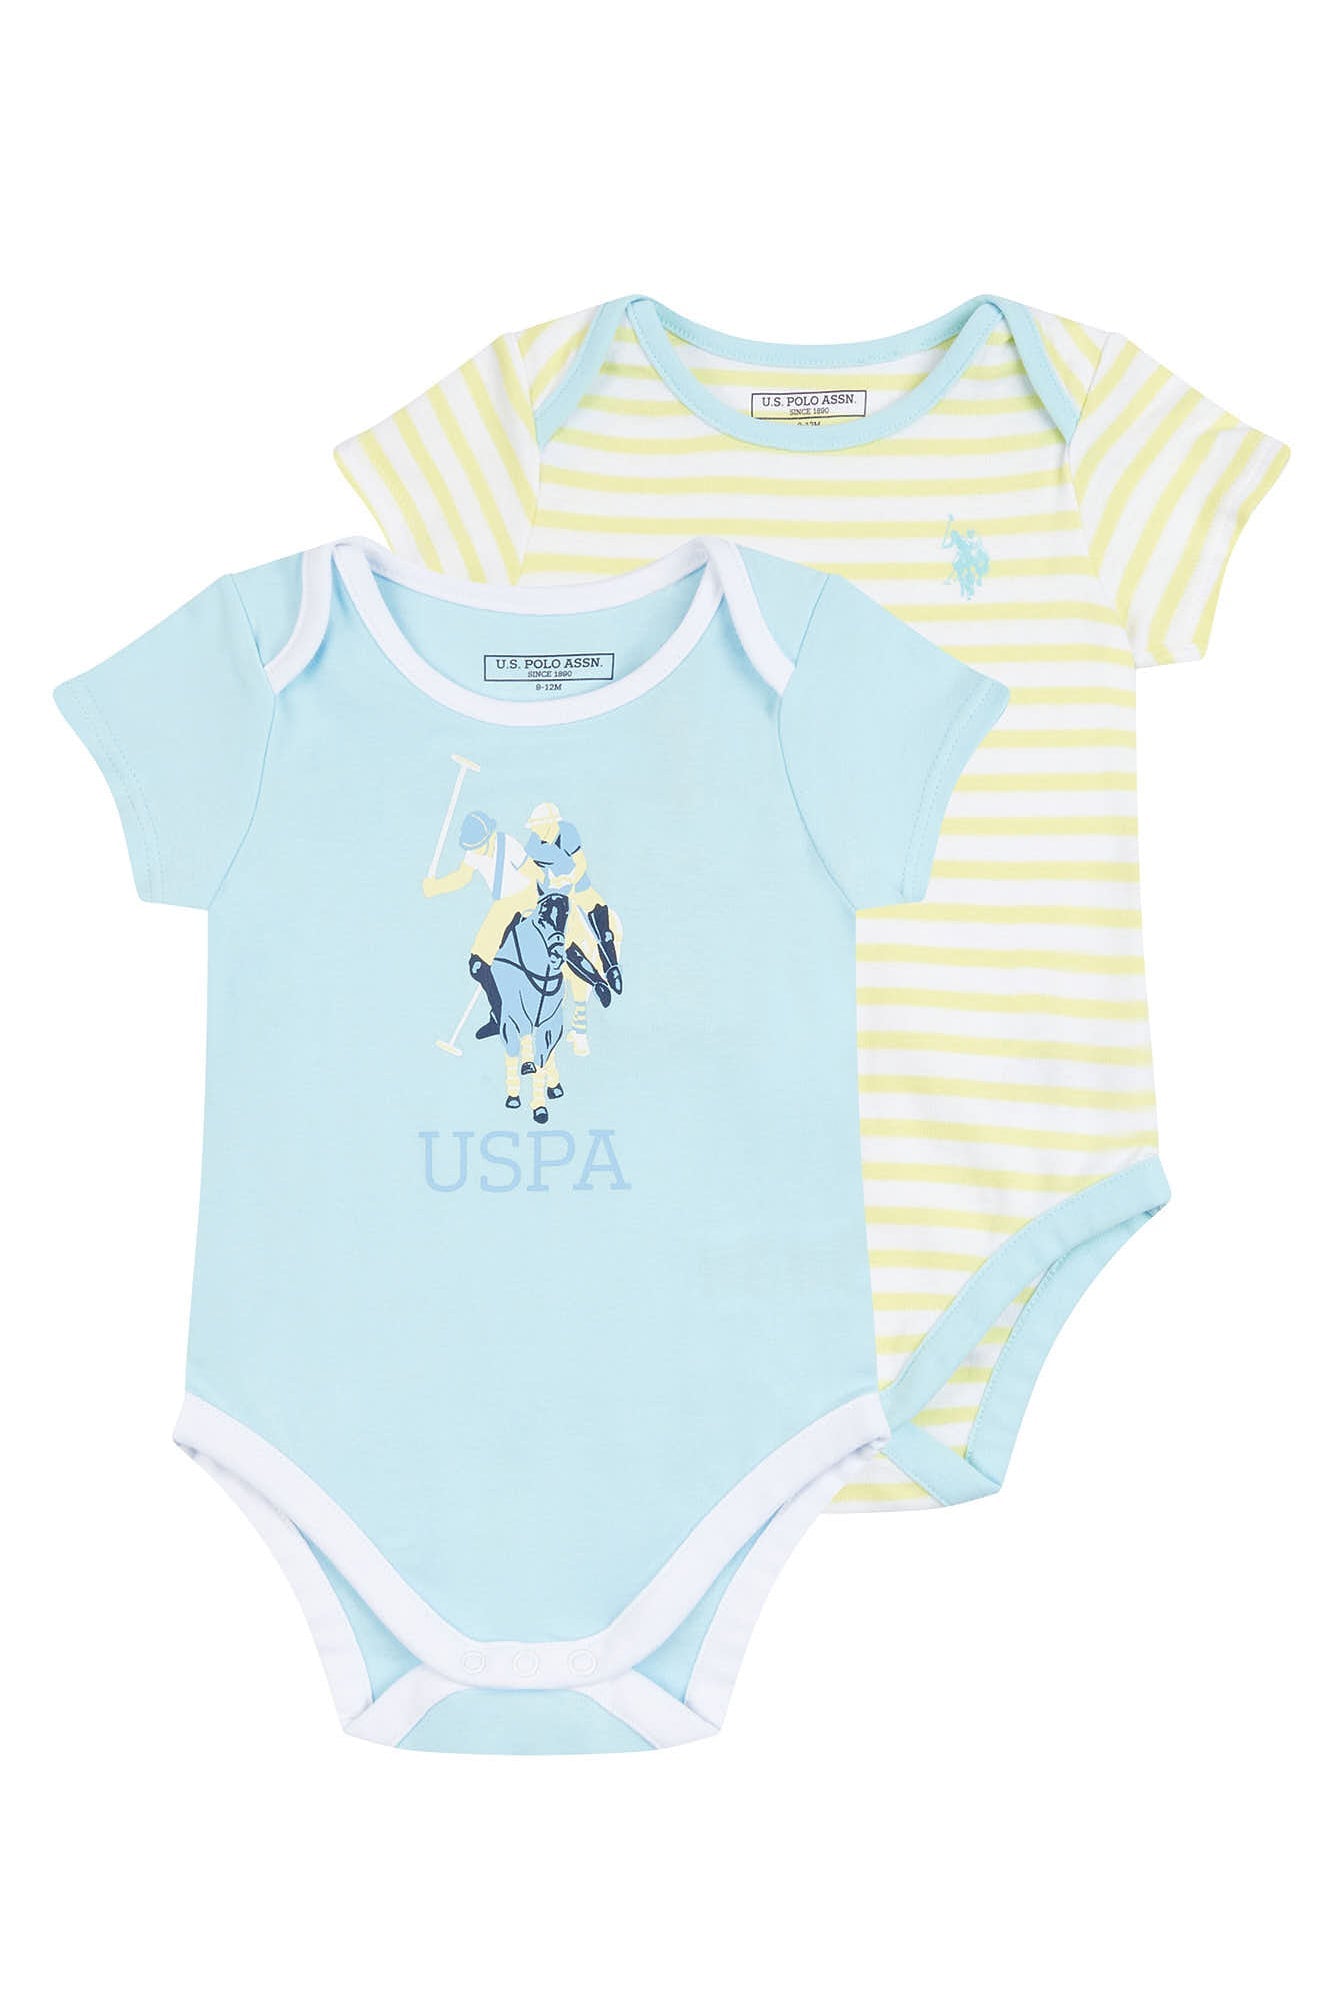 U.S. Polo Assn. Infant 2 Pack Bodysuits in Spun Sugar